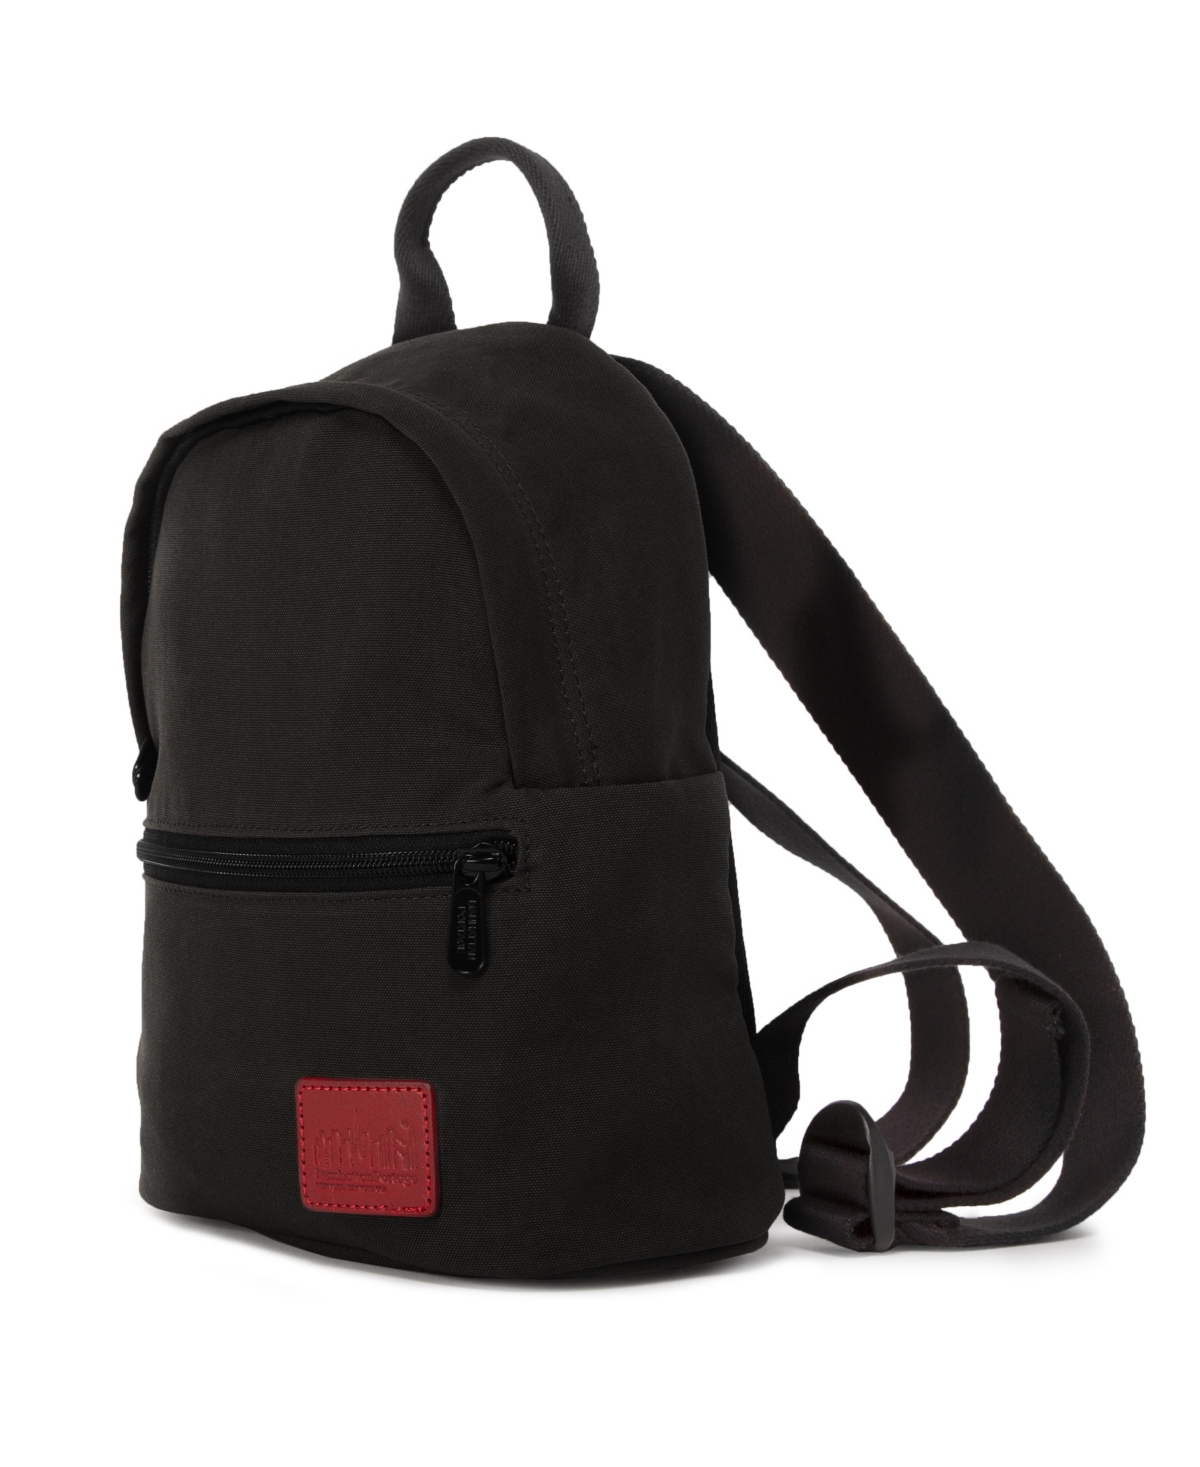 Waxed Nylon Randall's Backpack - Dark Brown